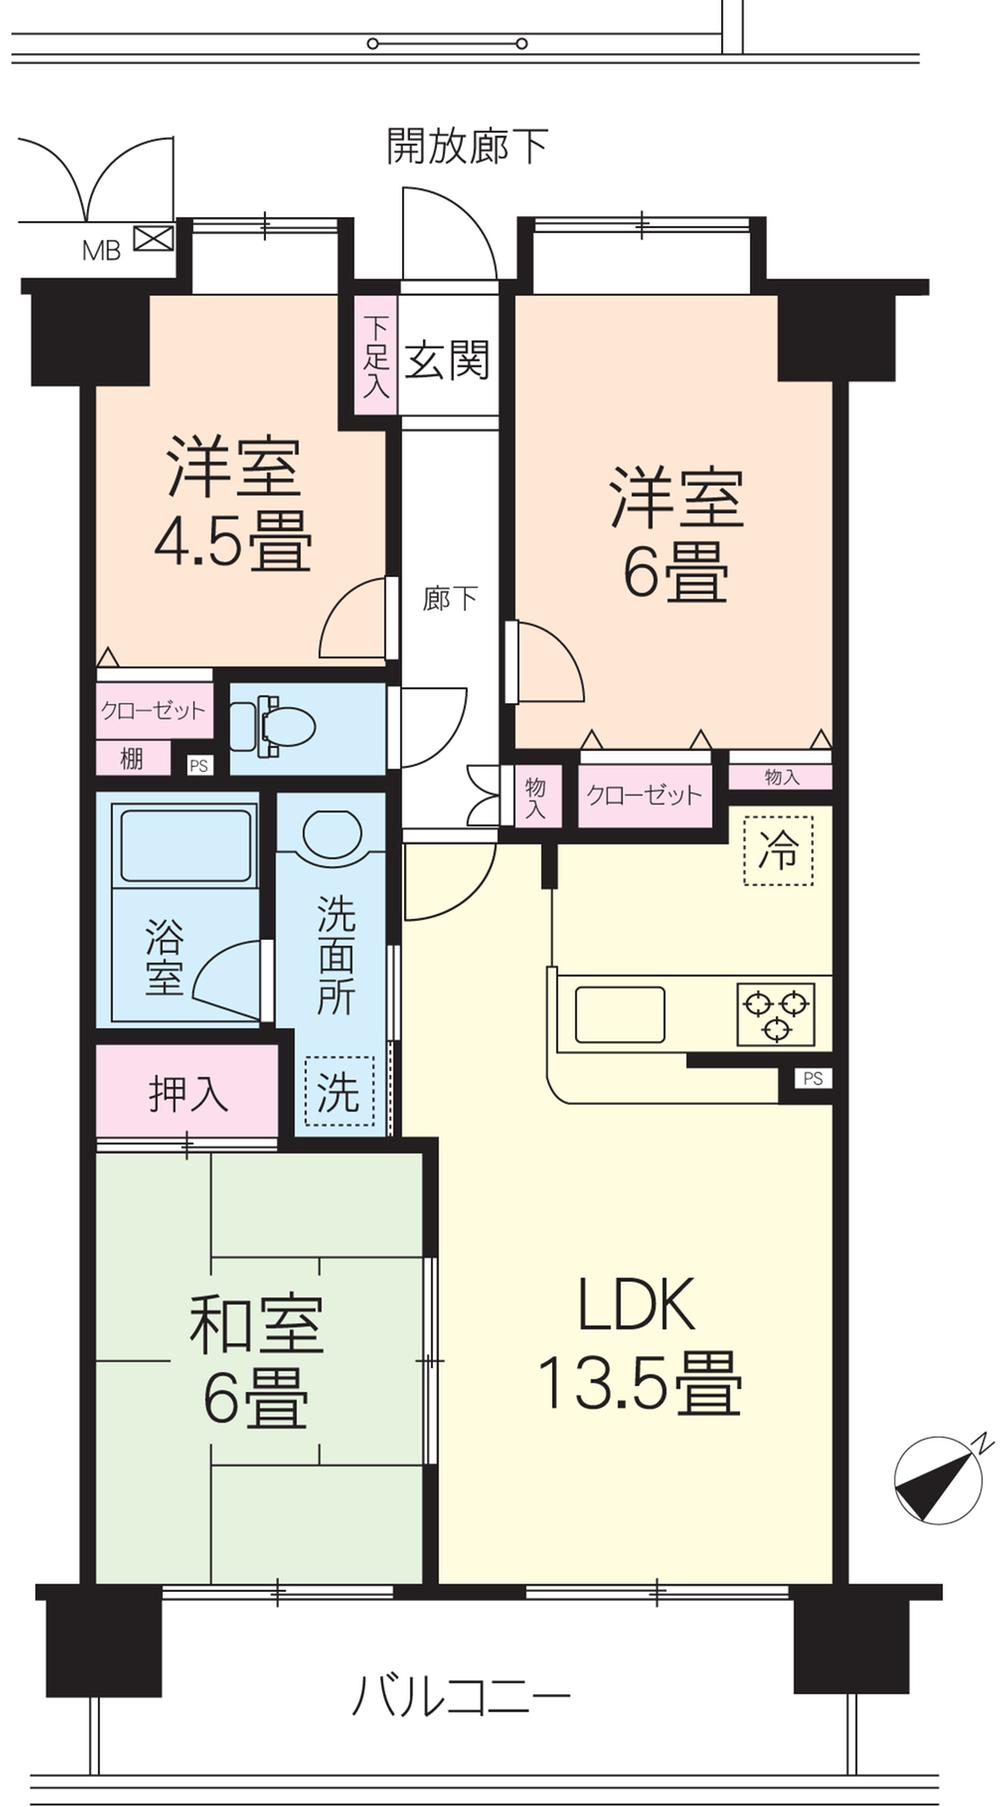 Floor plan. 3LDK, Price 23.8 million yen, Footprint 63 sq m , Balcony area 9.72 sq m